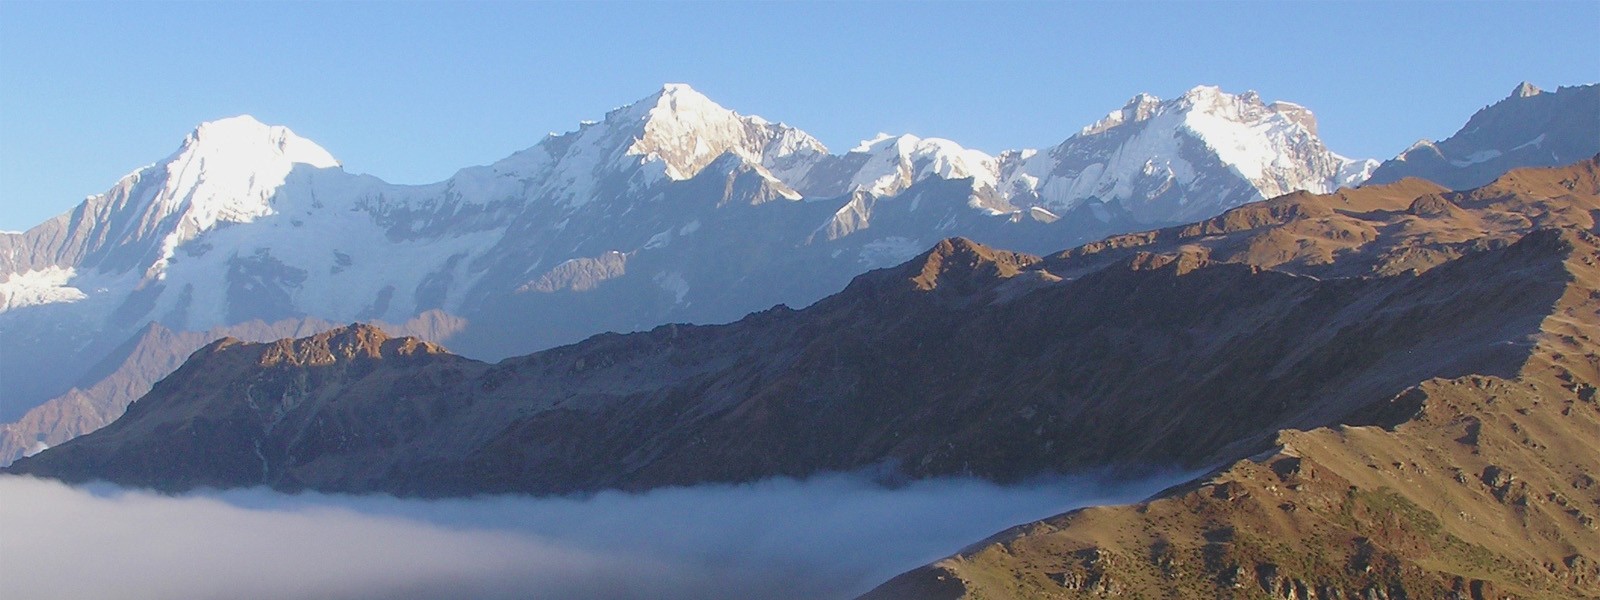 Mount Ganesh Himal II Expedition 